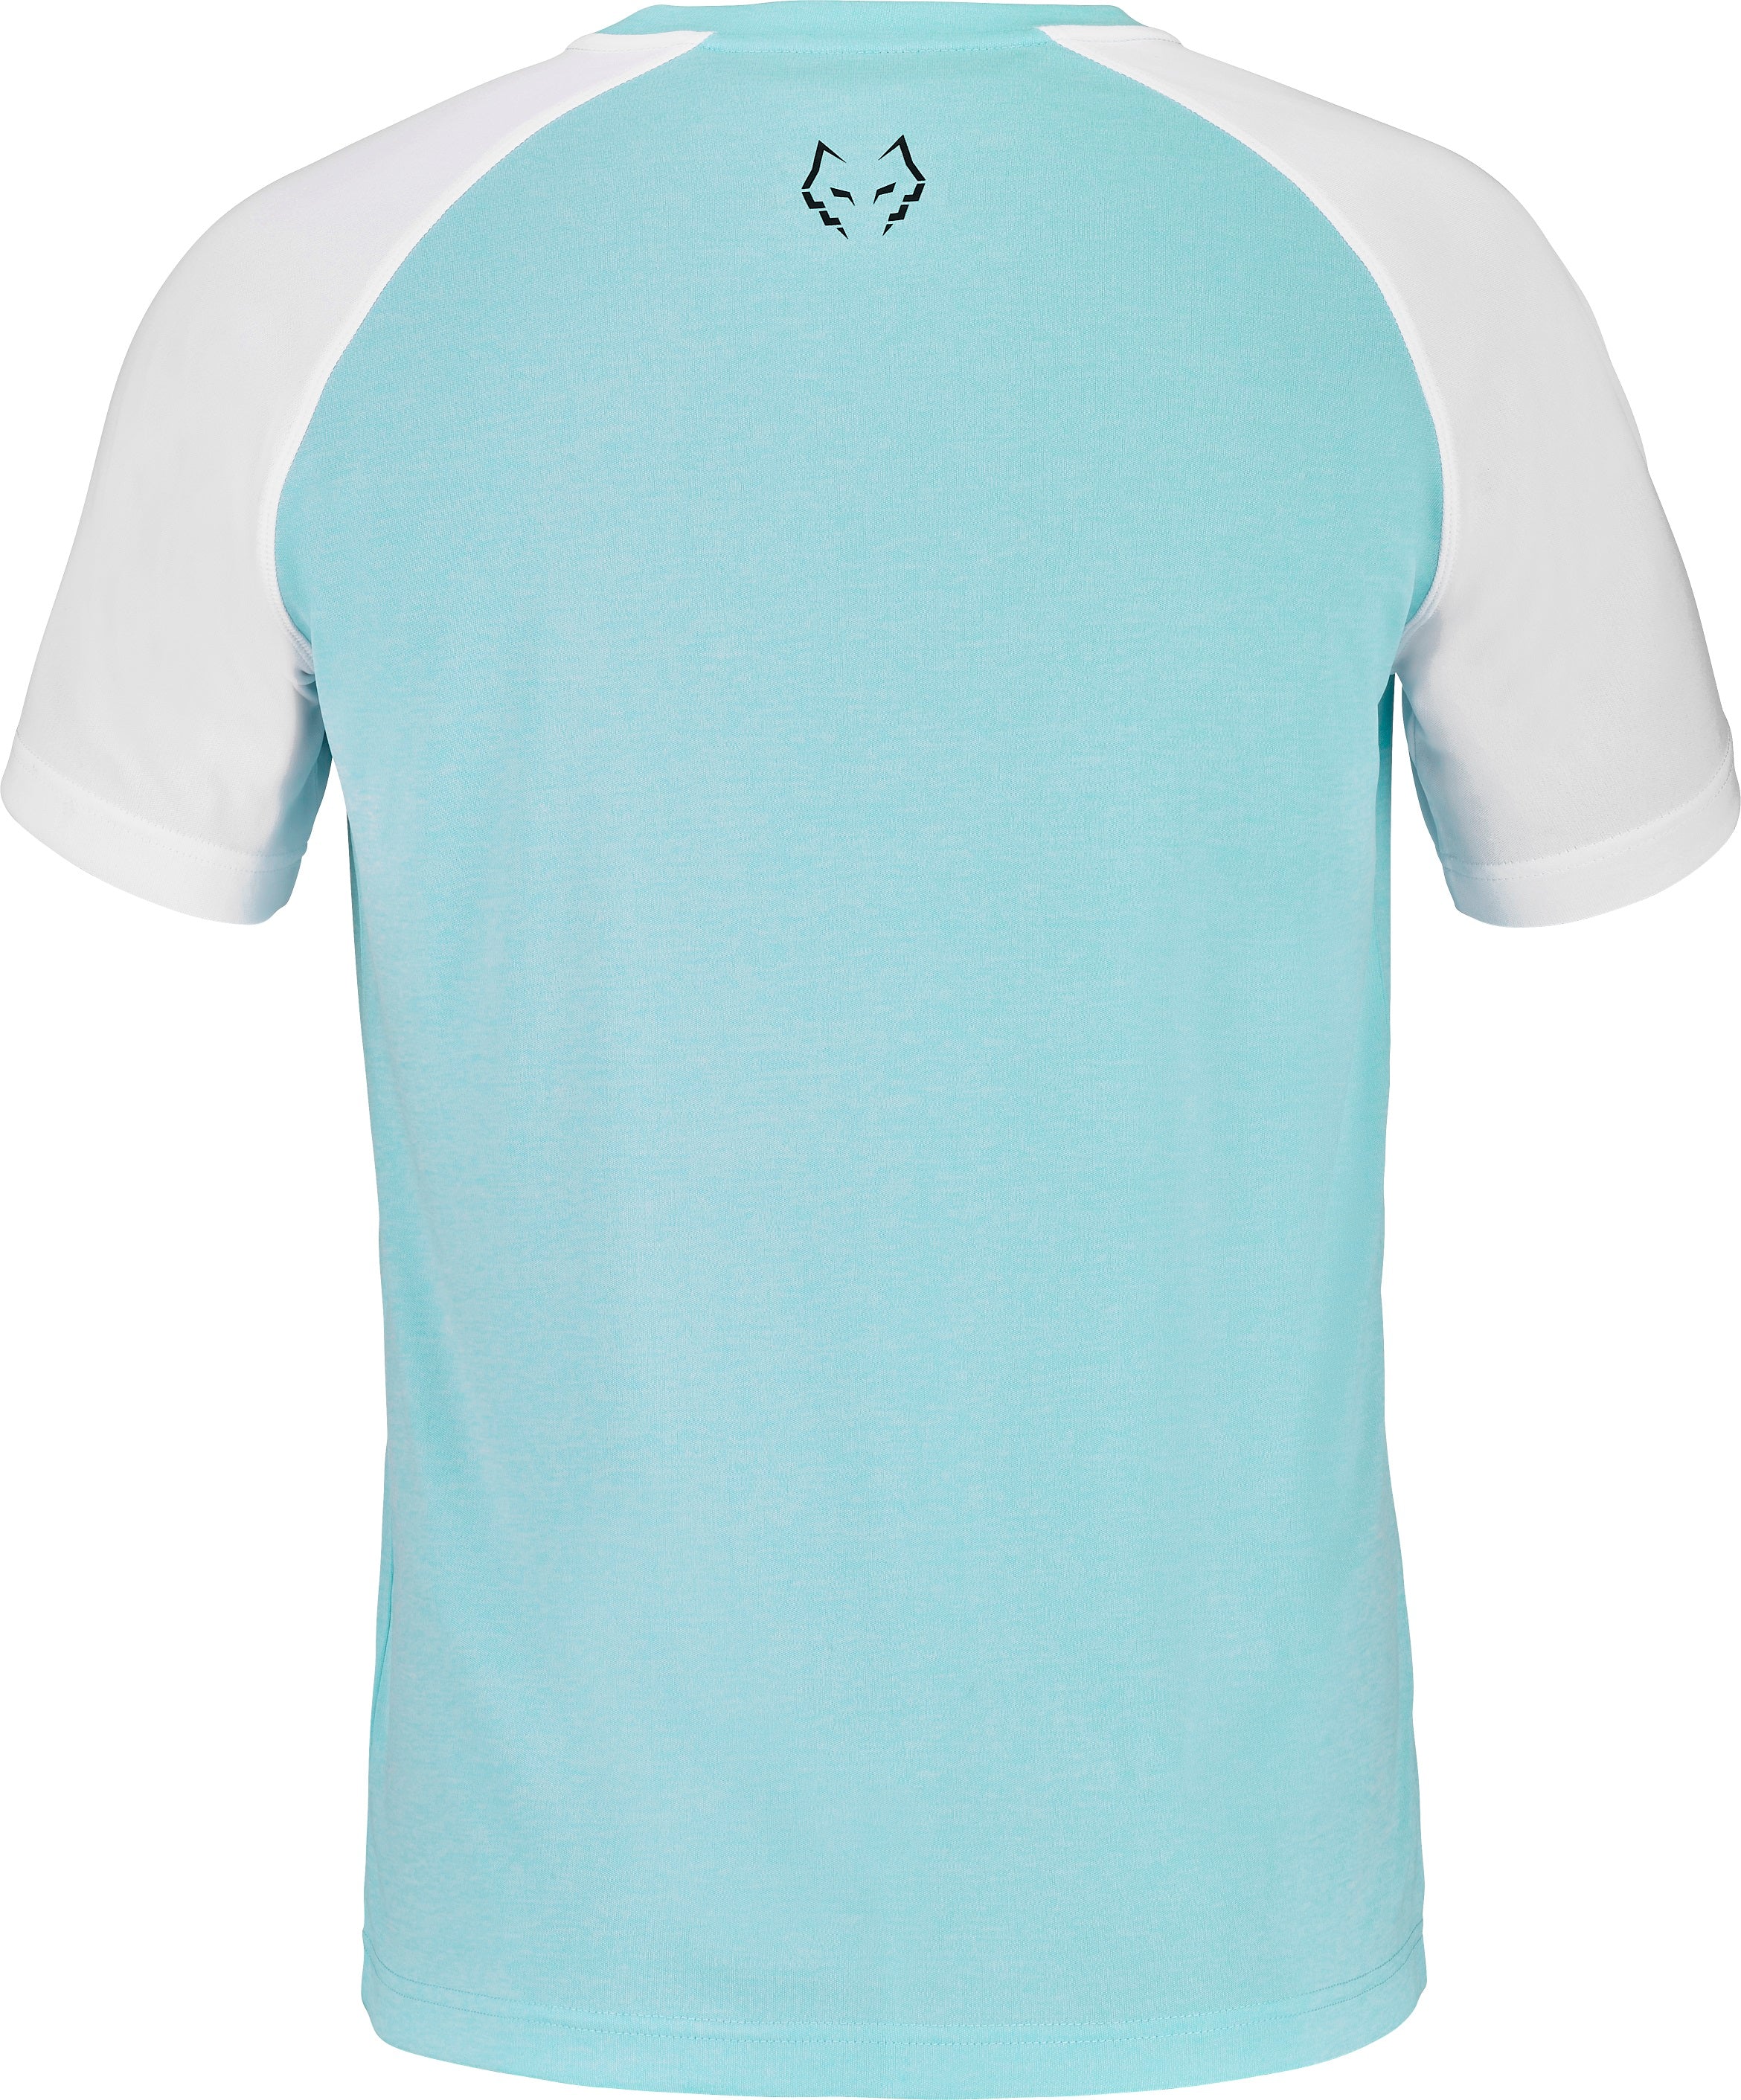 Babolat Crew Neck T-shirt Juan Lebron (Engelenblauw/Wit)